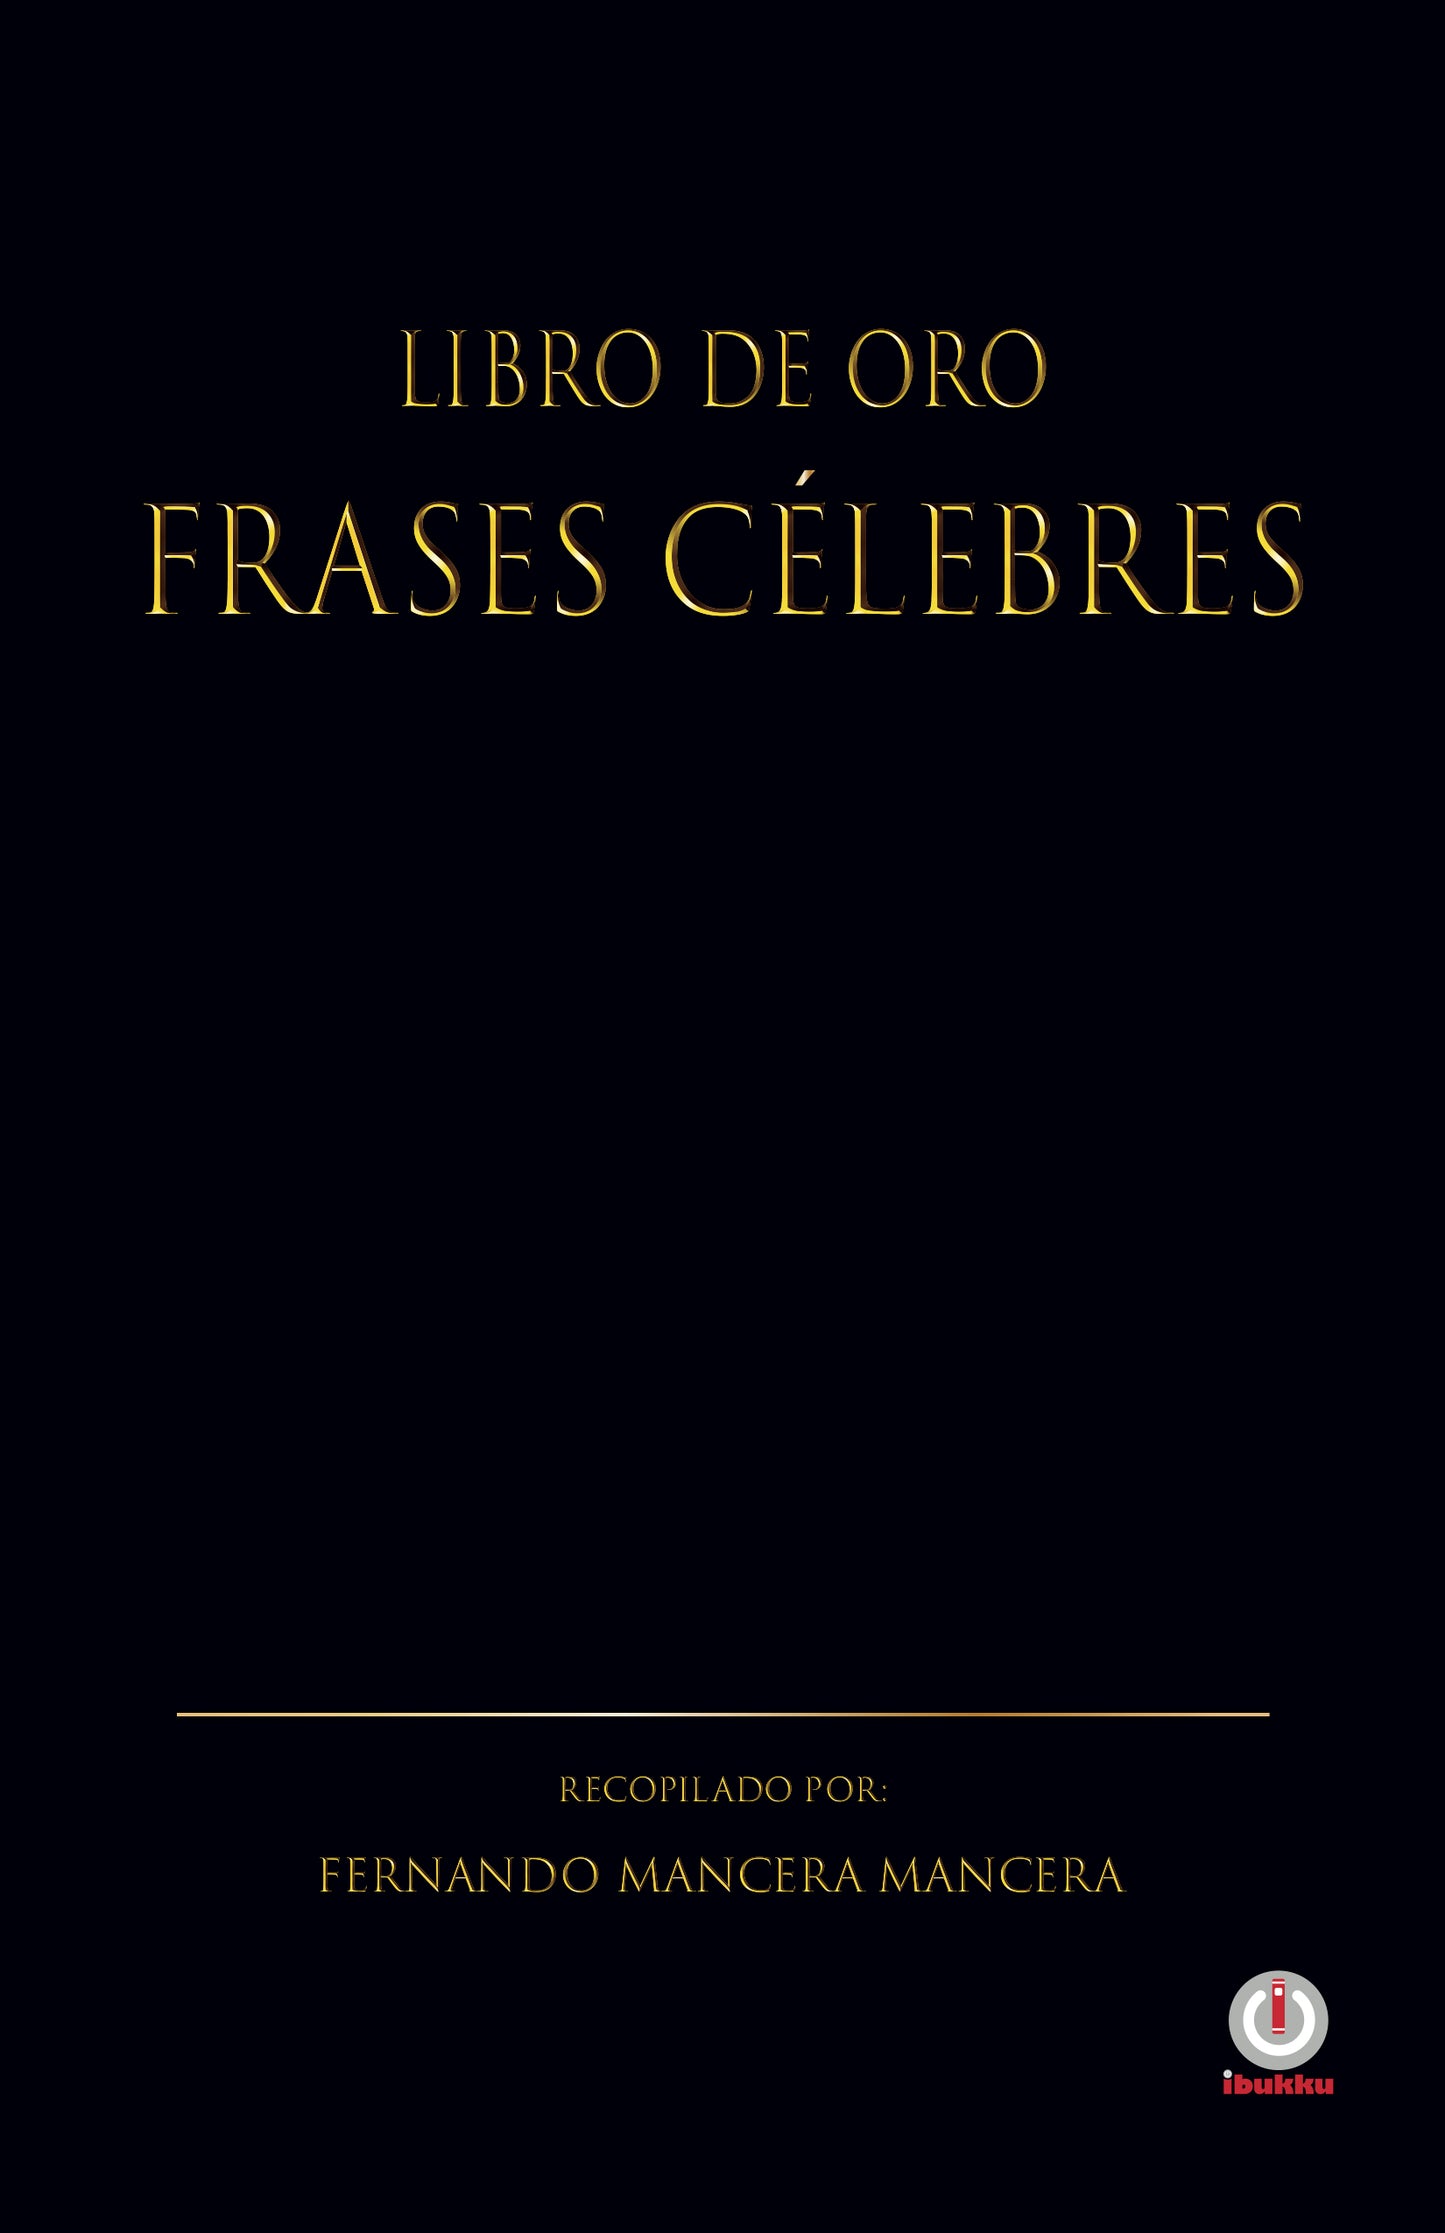 Libro de oro frases celebres (Impreso)